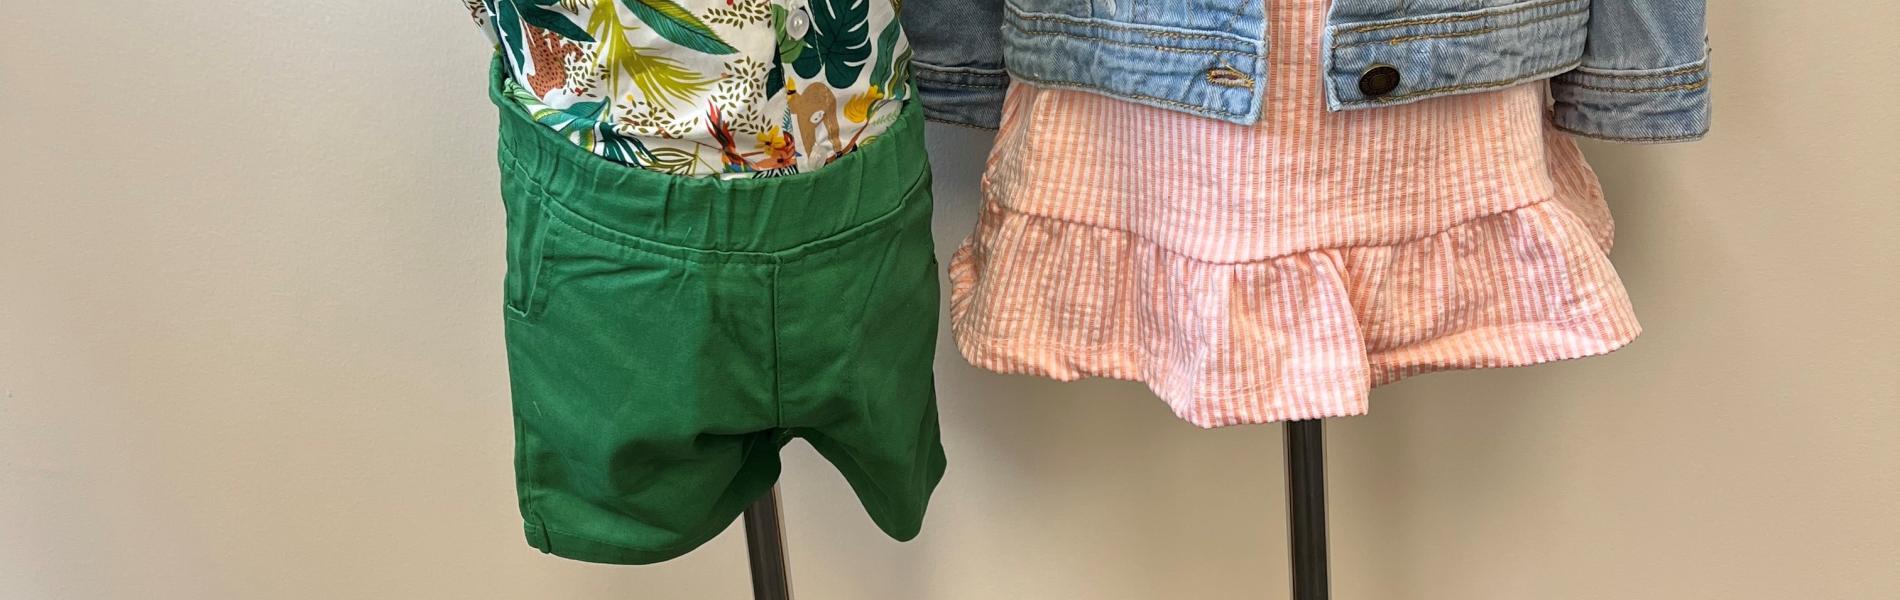 Children's Clothing at Italy's Kloset